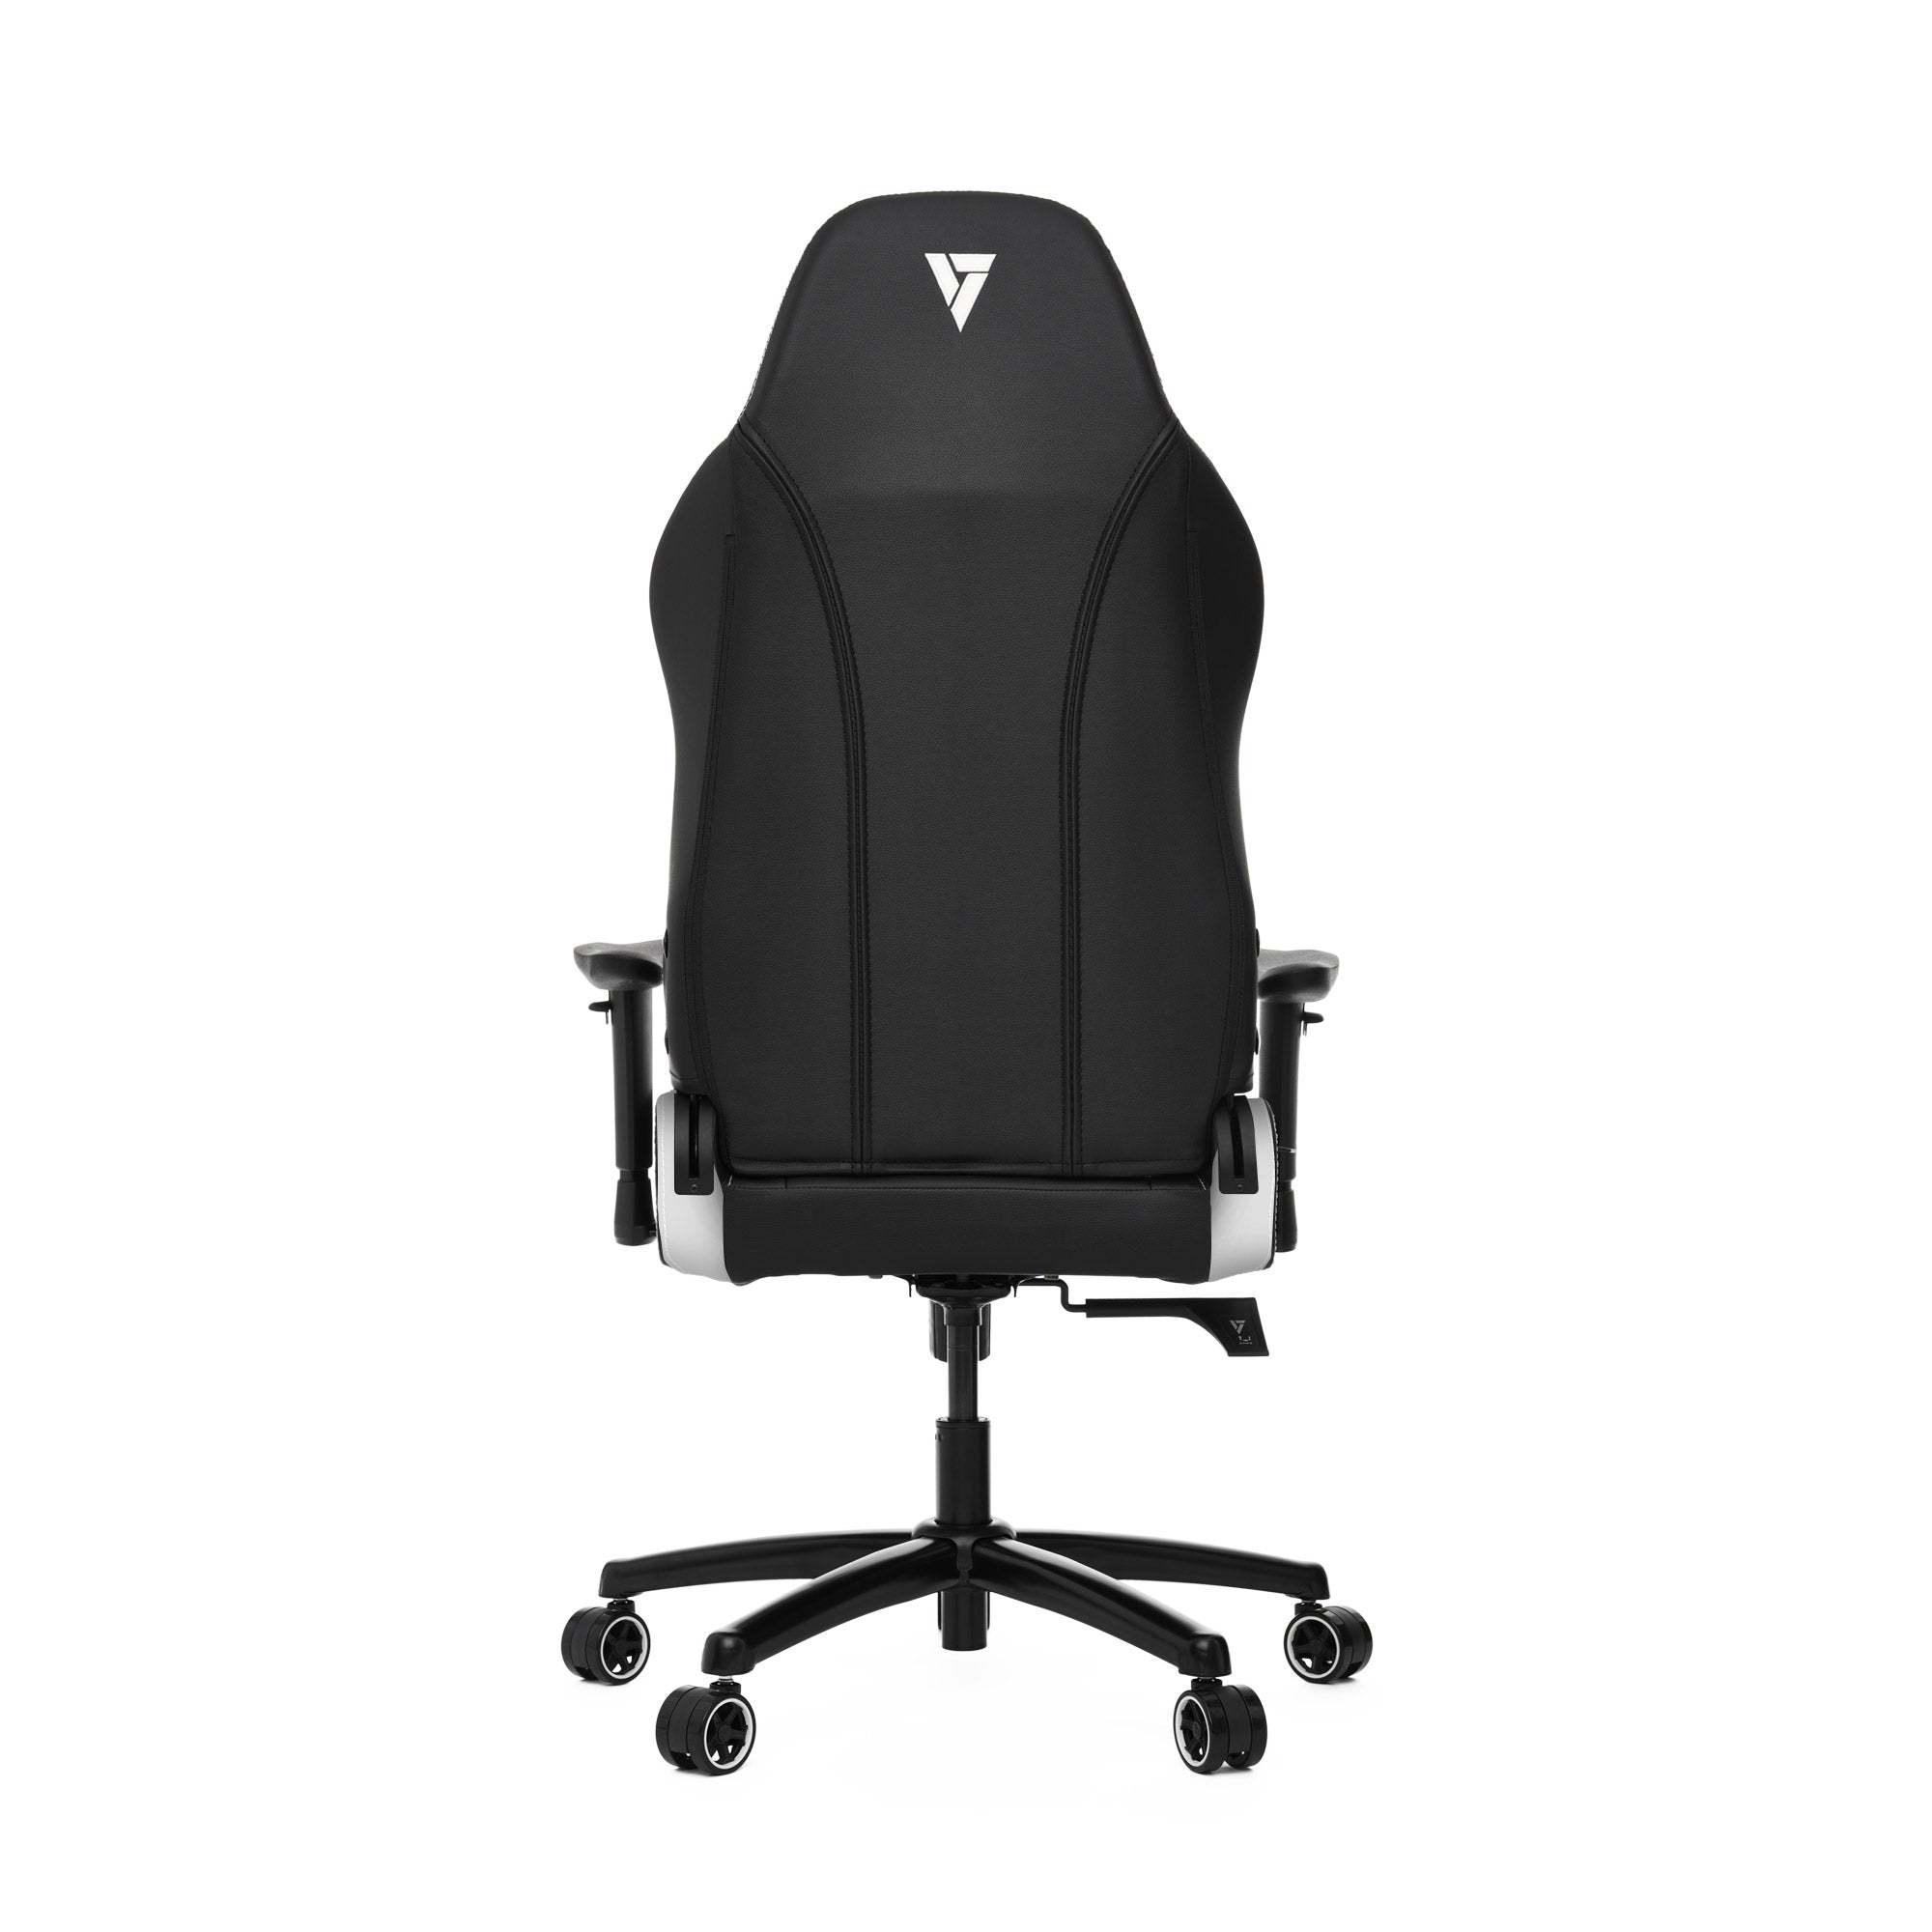 Vertagear PL1000 Gaming Chair - Black/White - كرسي - Store 974 | ستور ٩٧٤